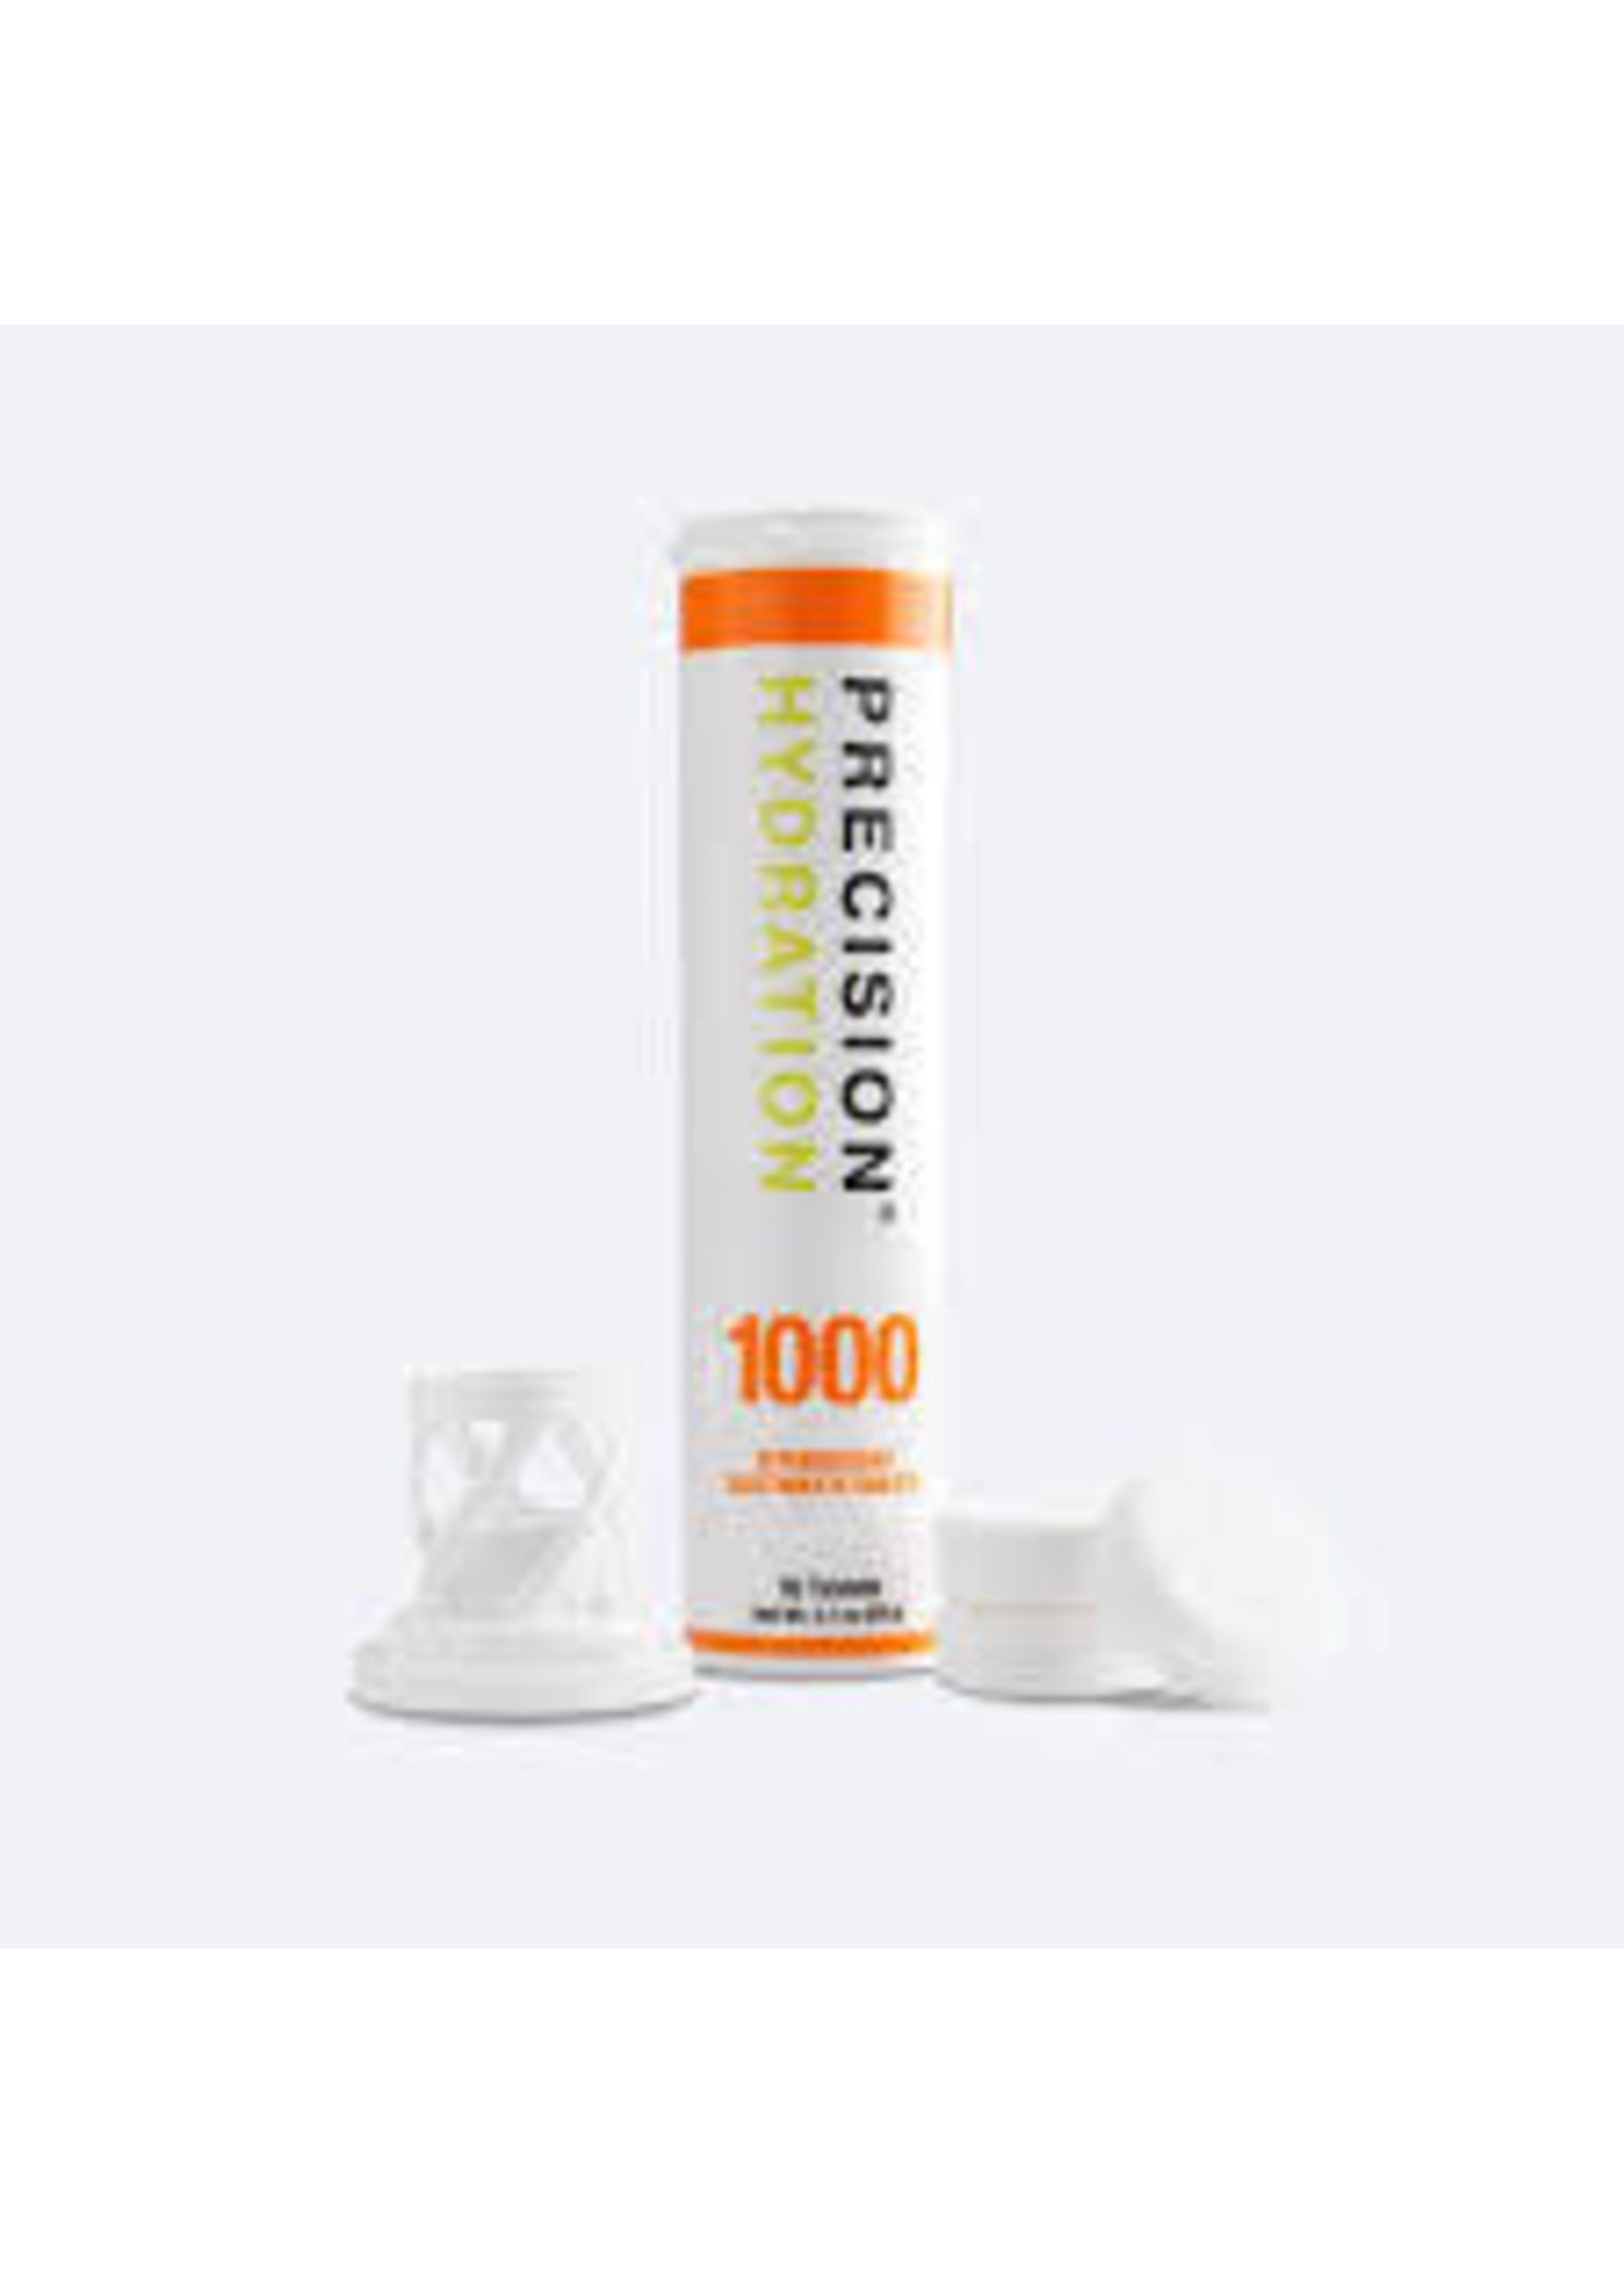 Precision Hydration PH 1000 Tablets